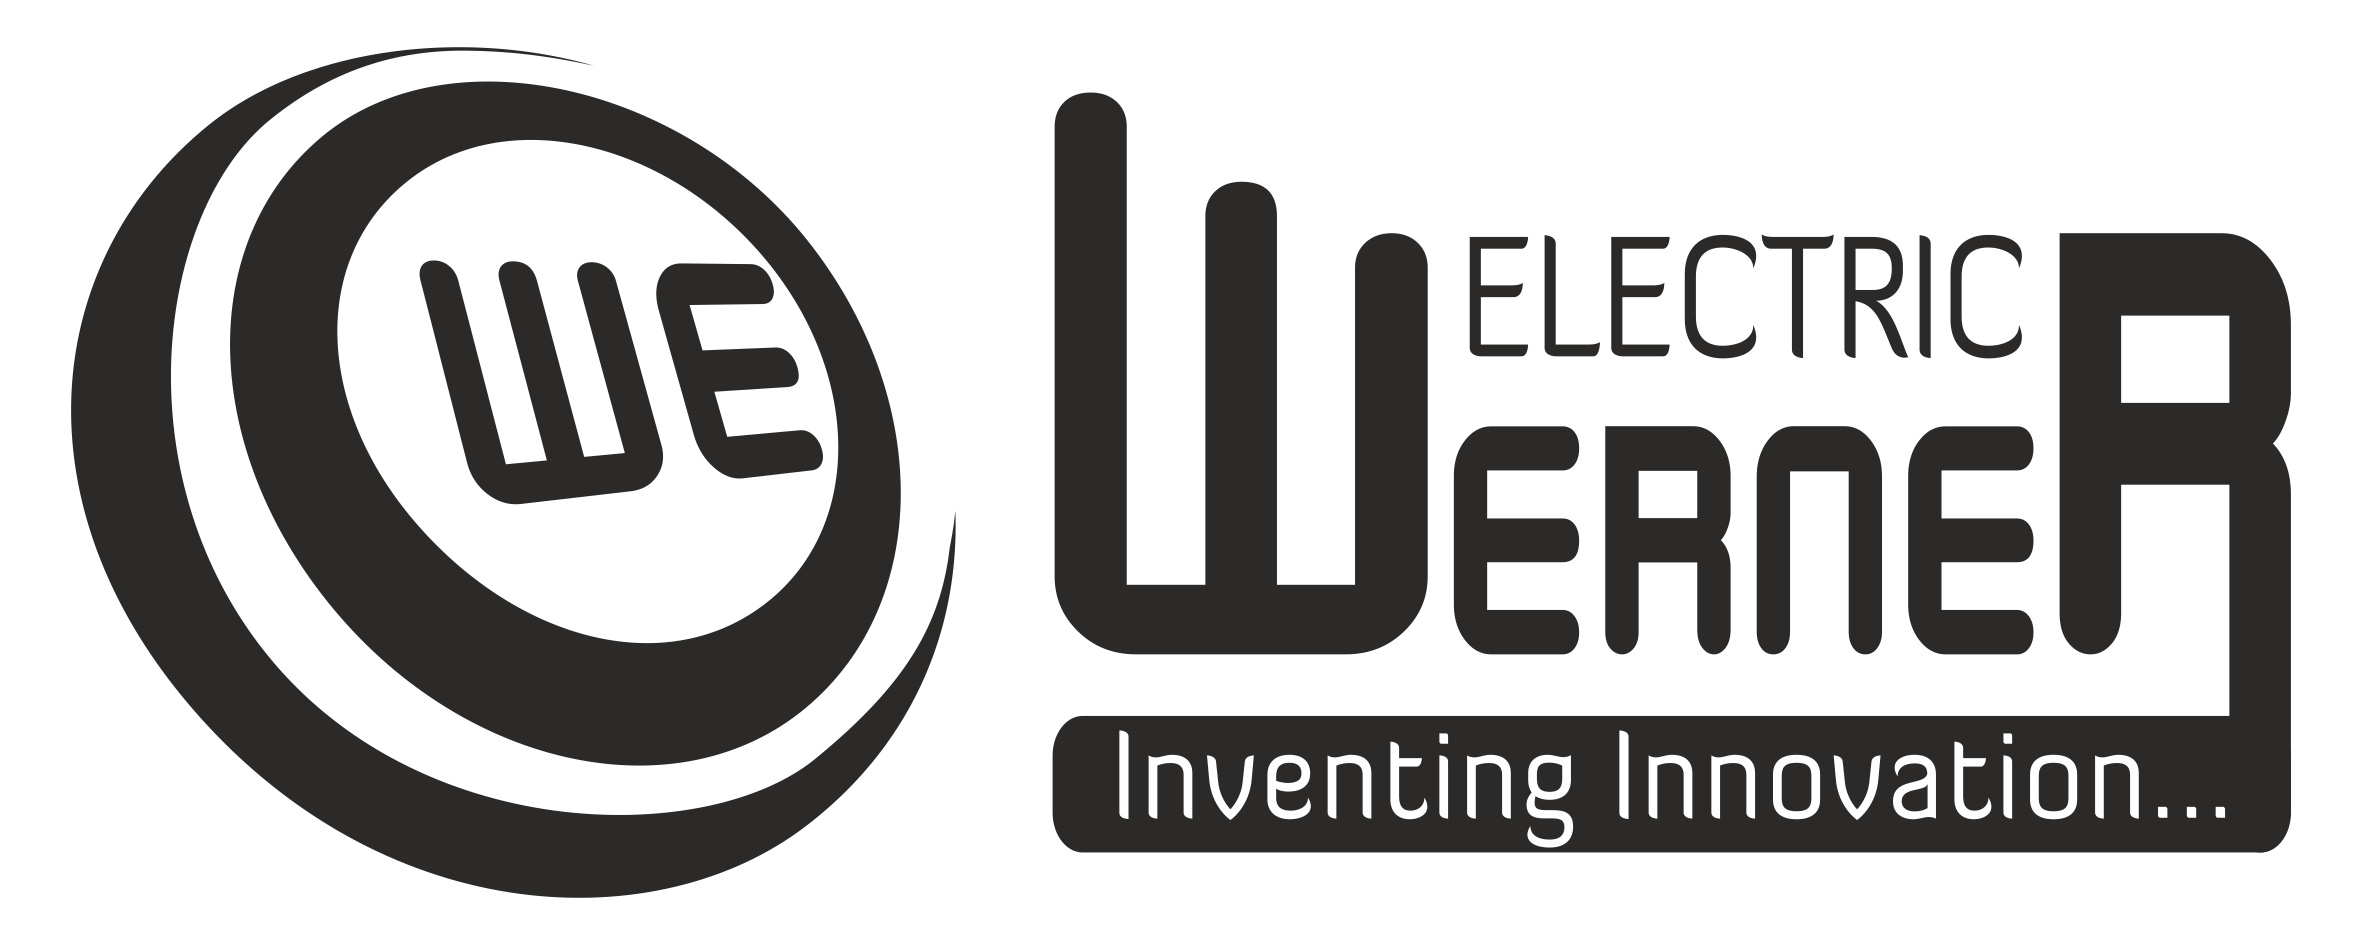 We Are Werner Logo - Werner Elektrik GmbH